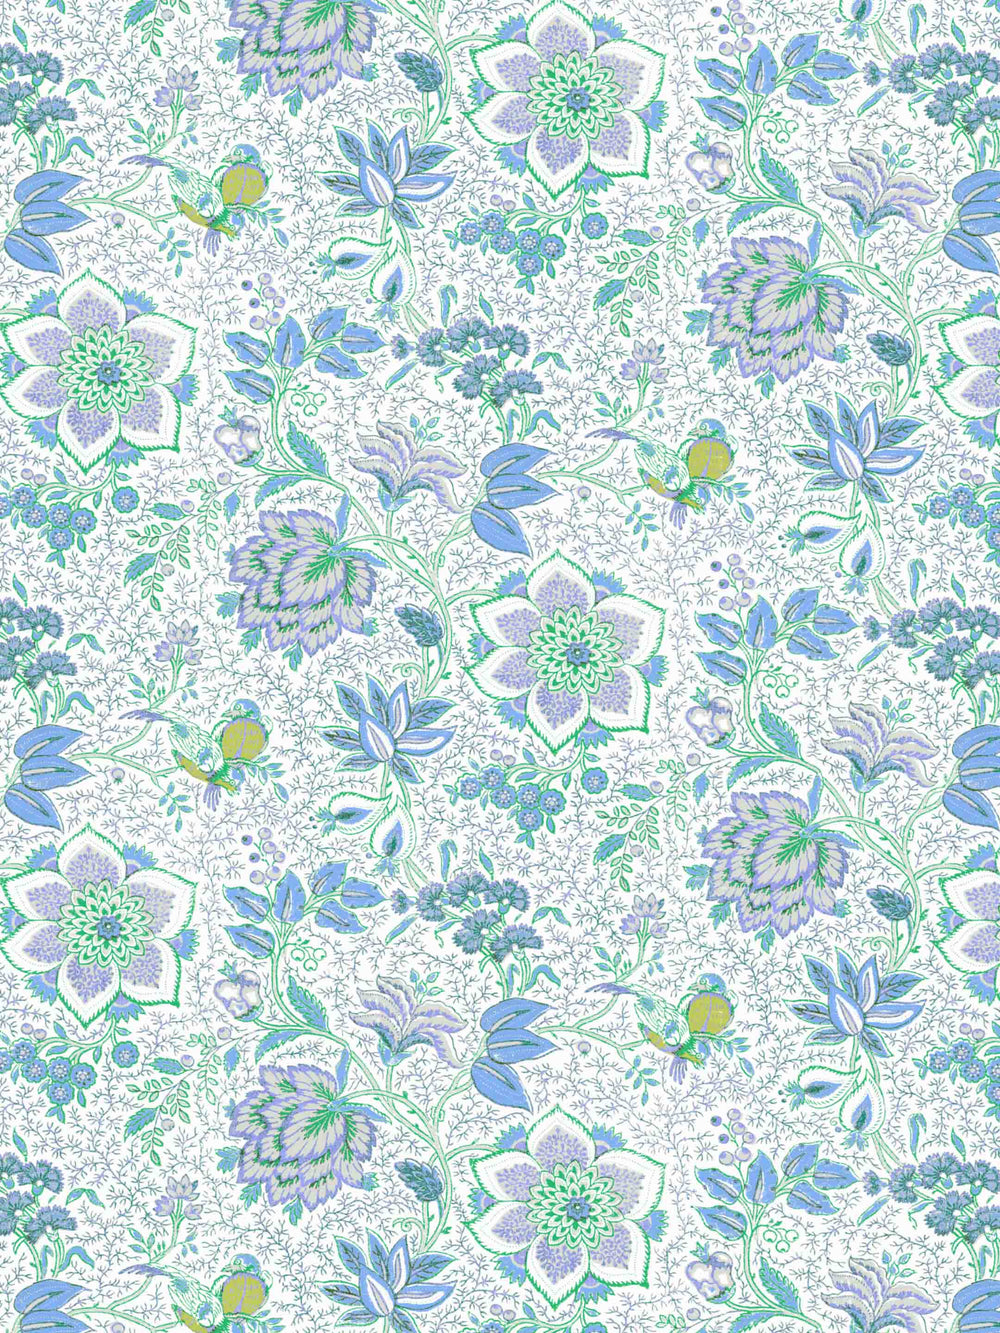 Folie Flora Floral Wallpaper - Minty Blue